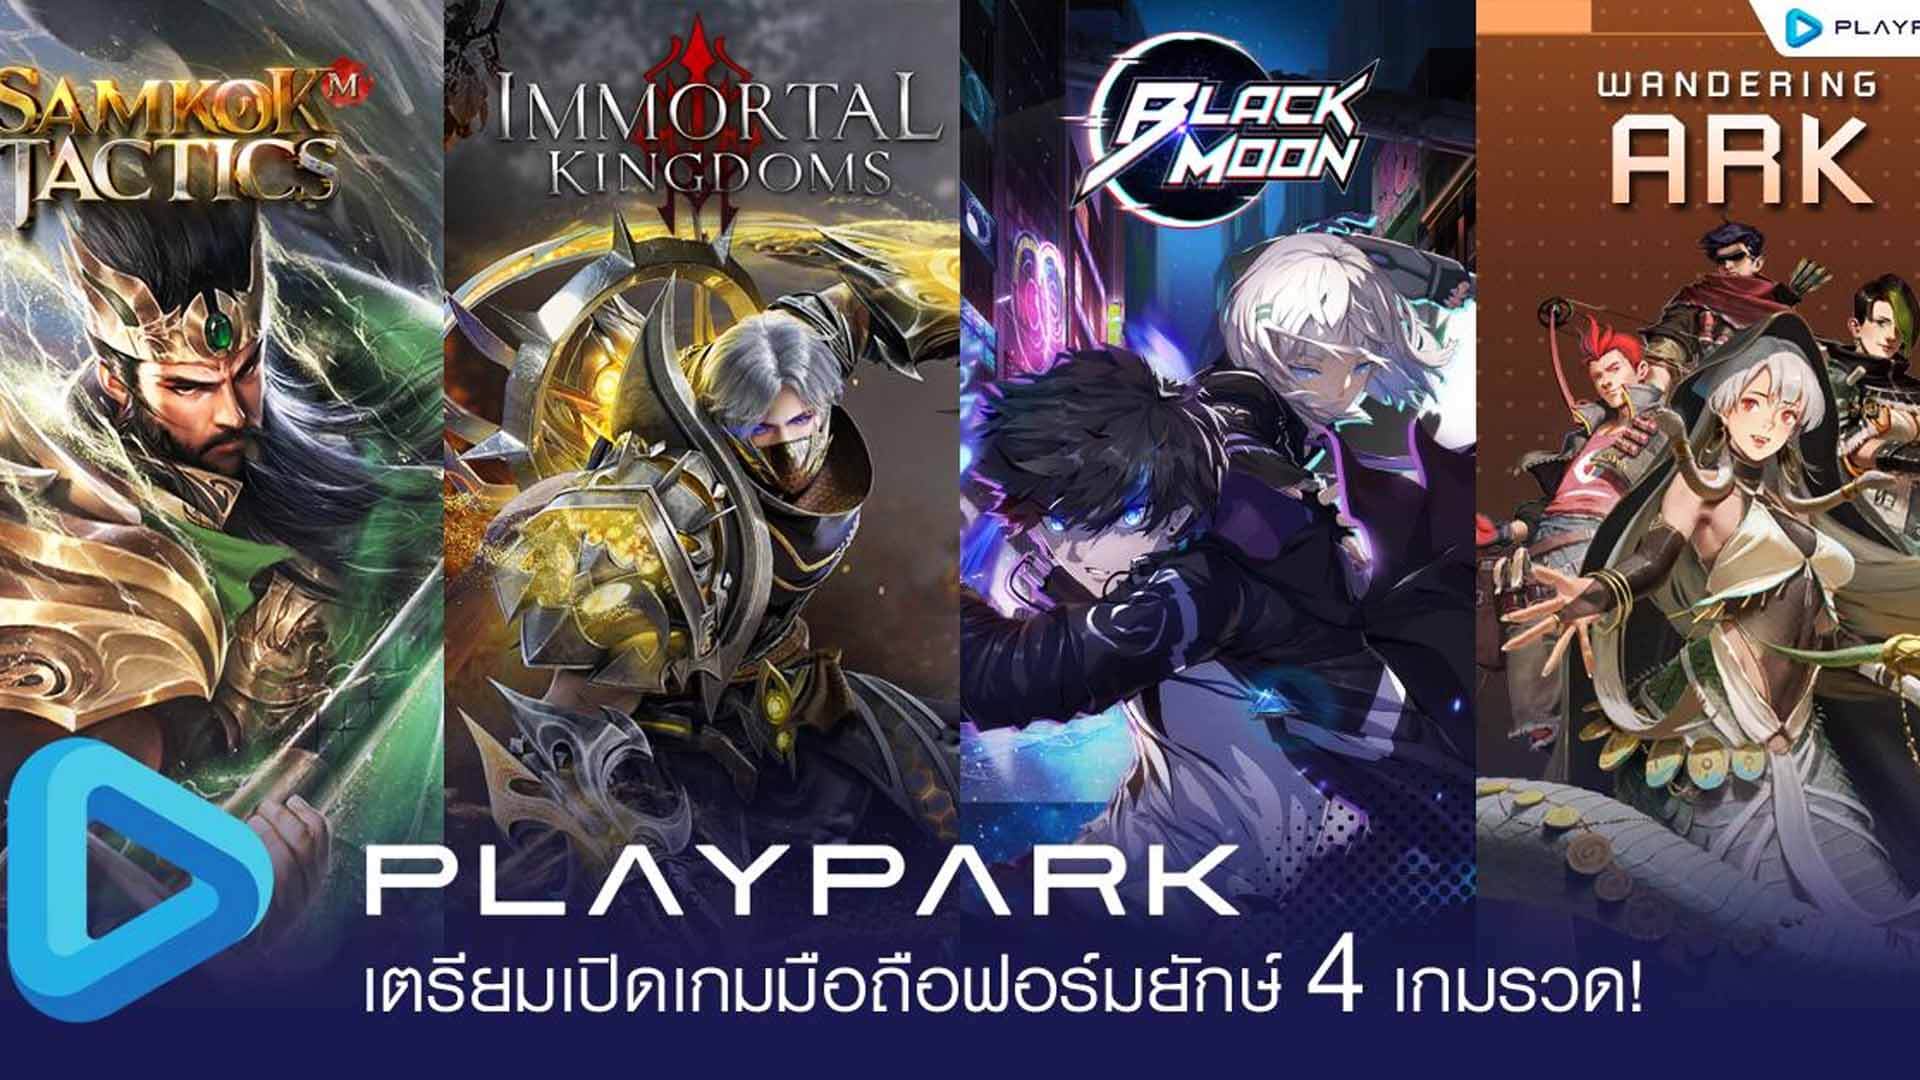 PlayPark